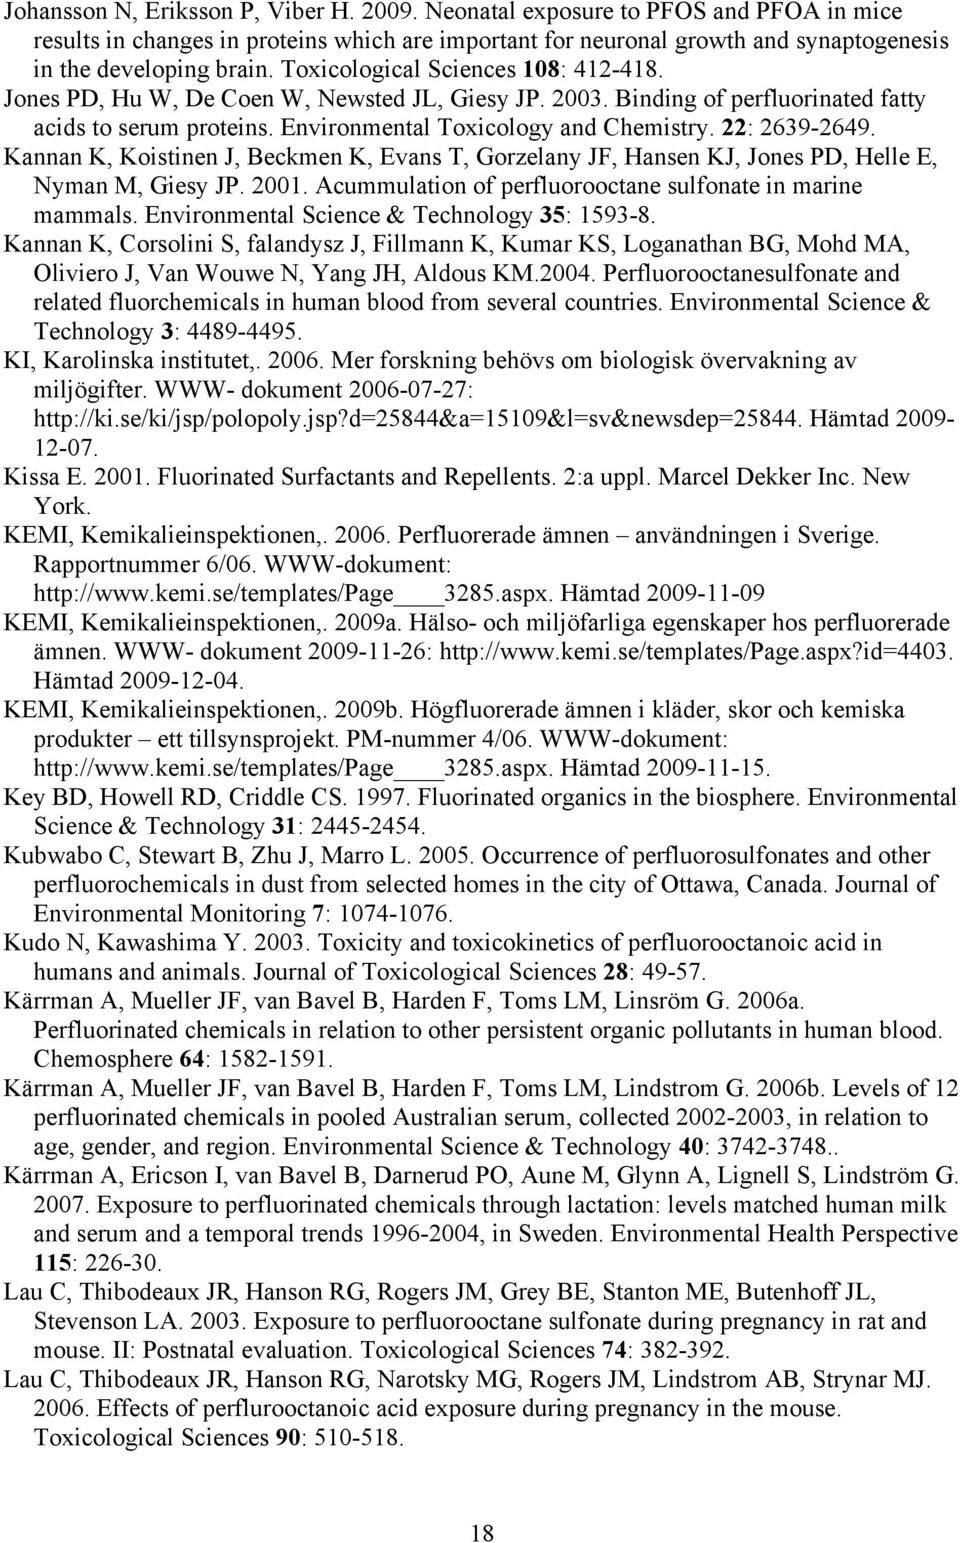 22: 2639-2649. Kannan K, Koistinen J, Beckmen K, Evans T, Gorzelany JF, Hansen KJ, Jones PD, Helle E, Nyman M, Giesy JP. 2001. Acummulation of perfluorooctane sulfonate in marine mammals.